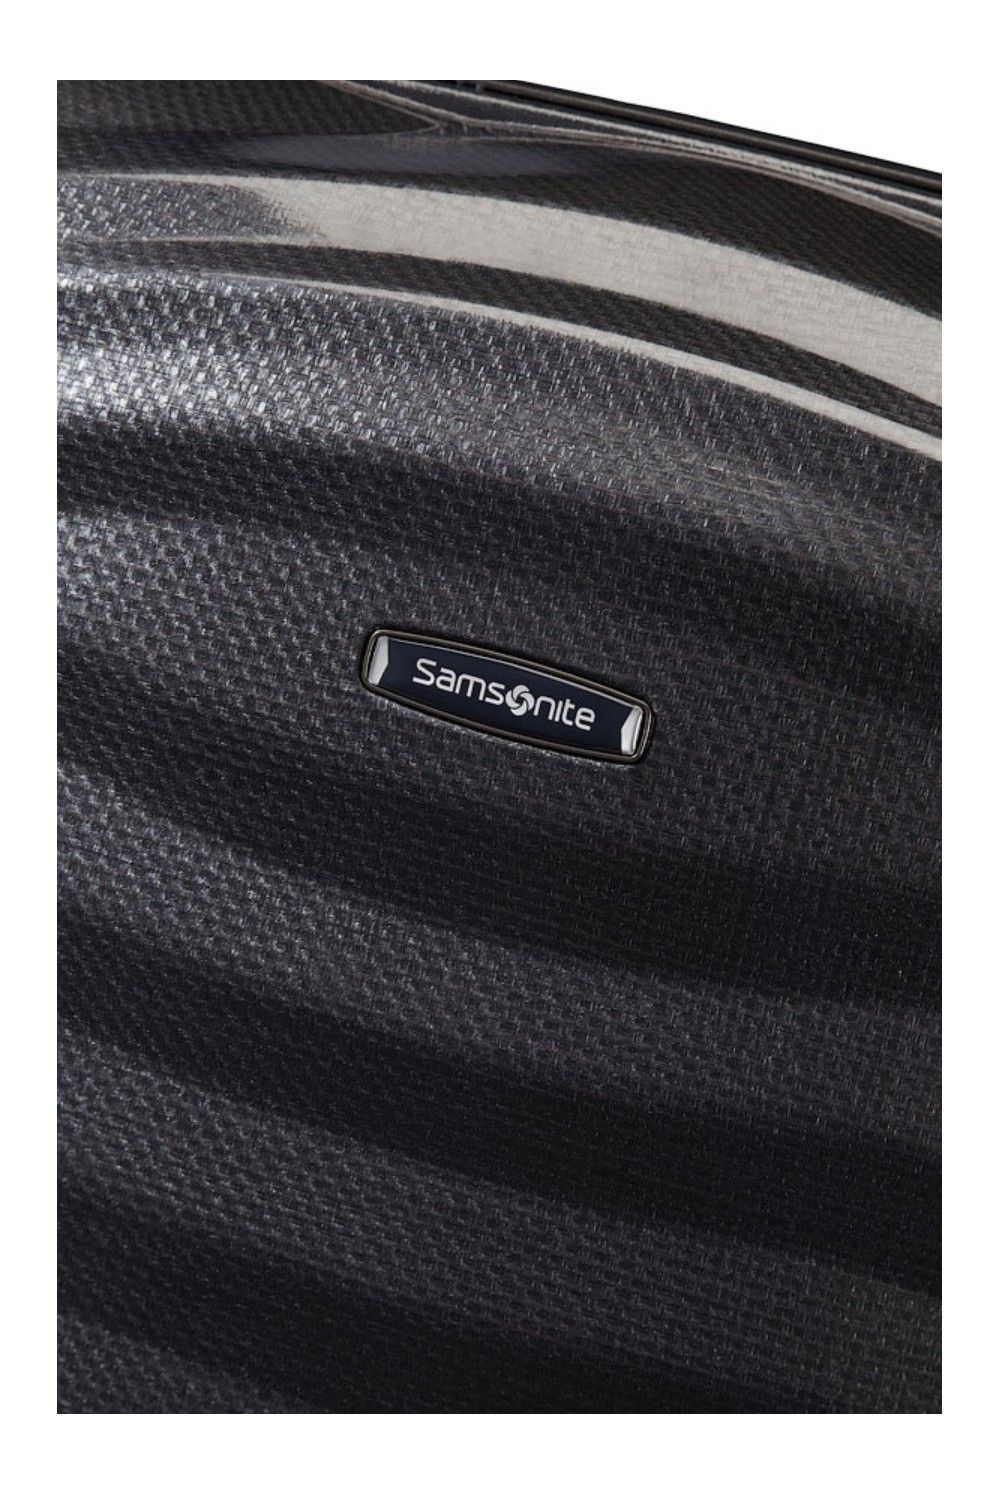 Samsonite Lite Shock 55 4 wheel carry-on luggage black